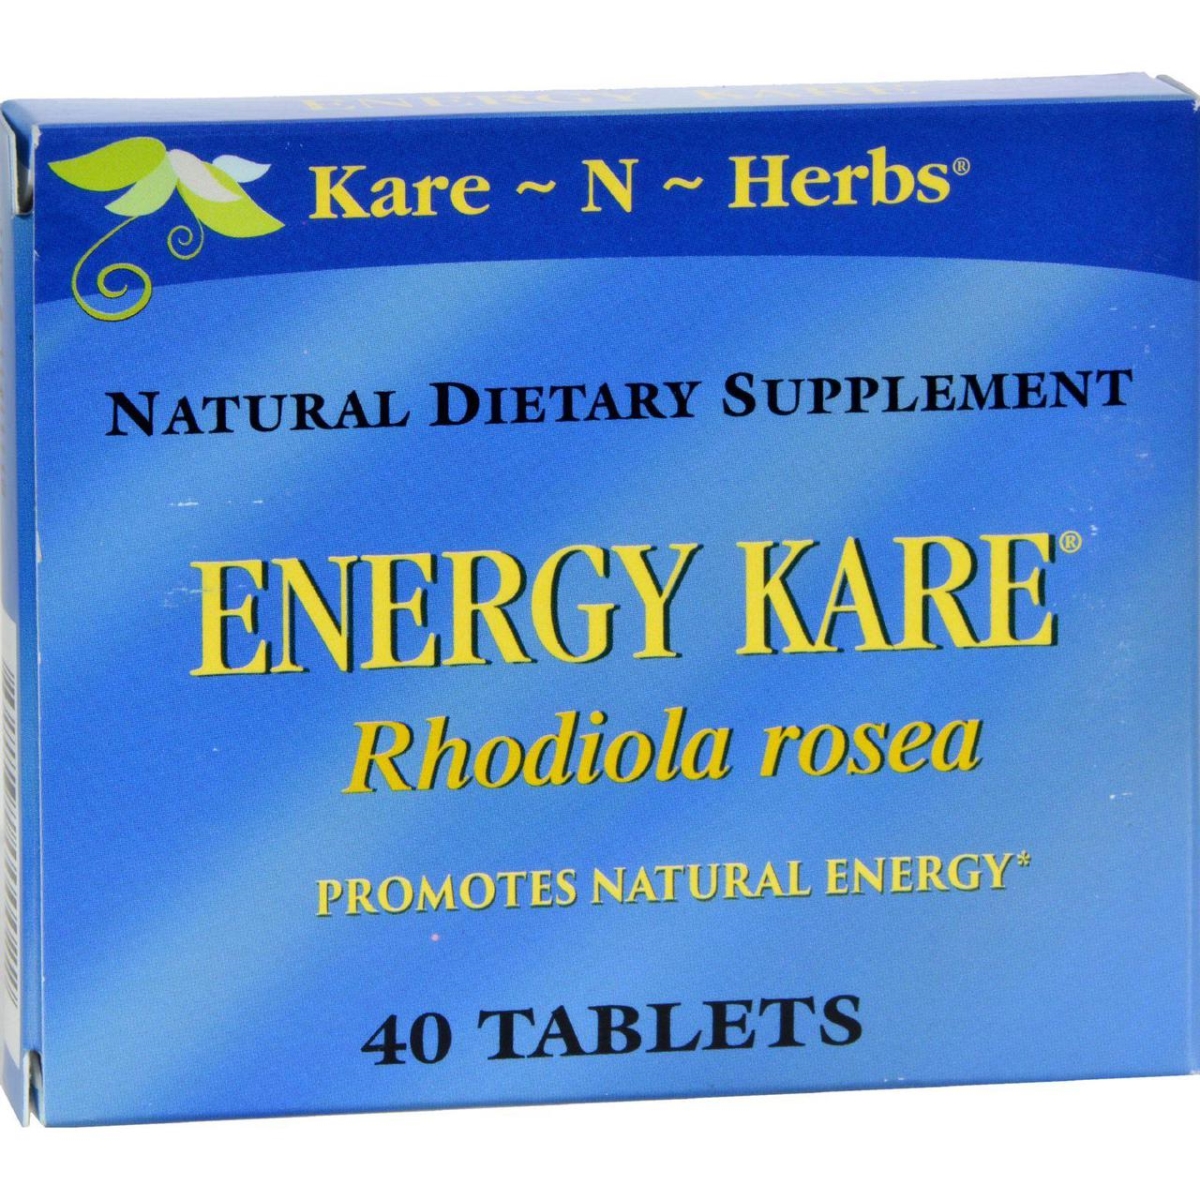 Hg0335513 Energy Kare - 40 Tablets